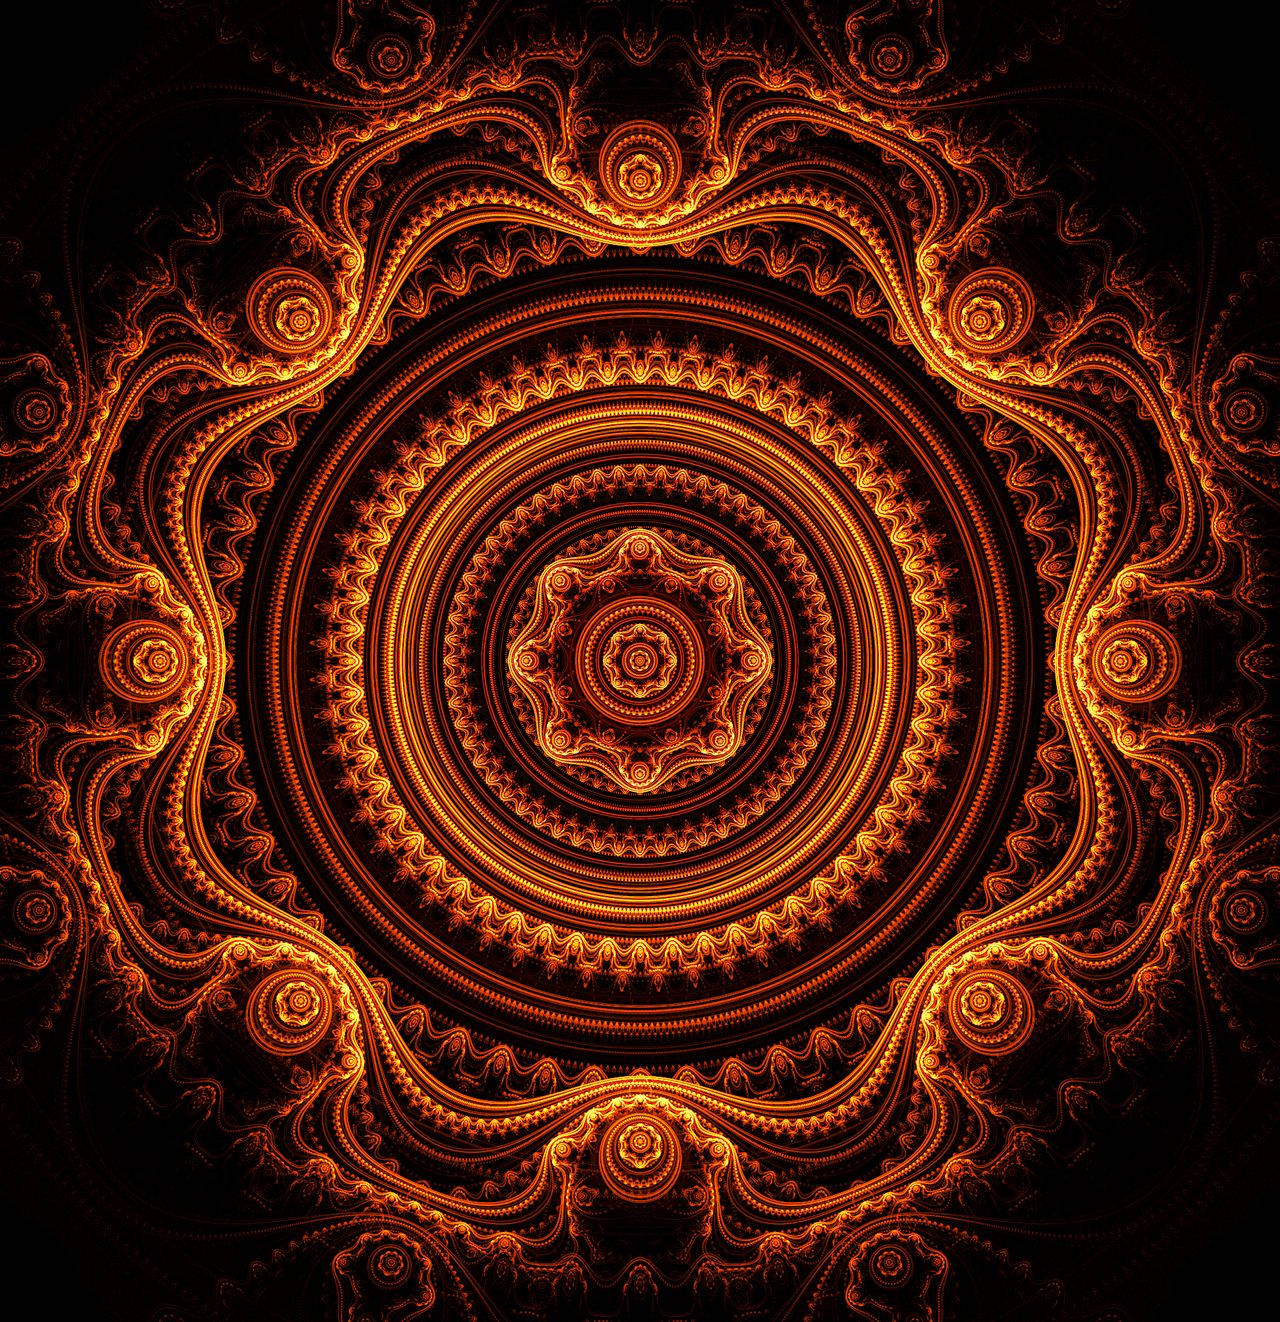 Mandala 1280X1322 Wallpaper and Background Image